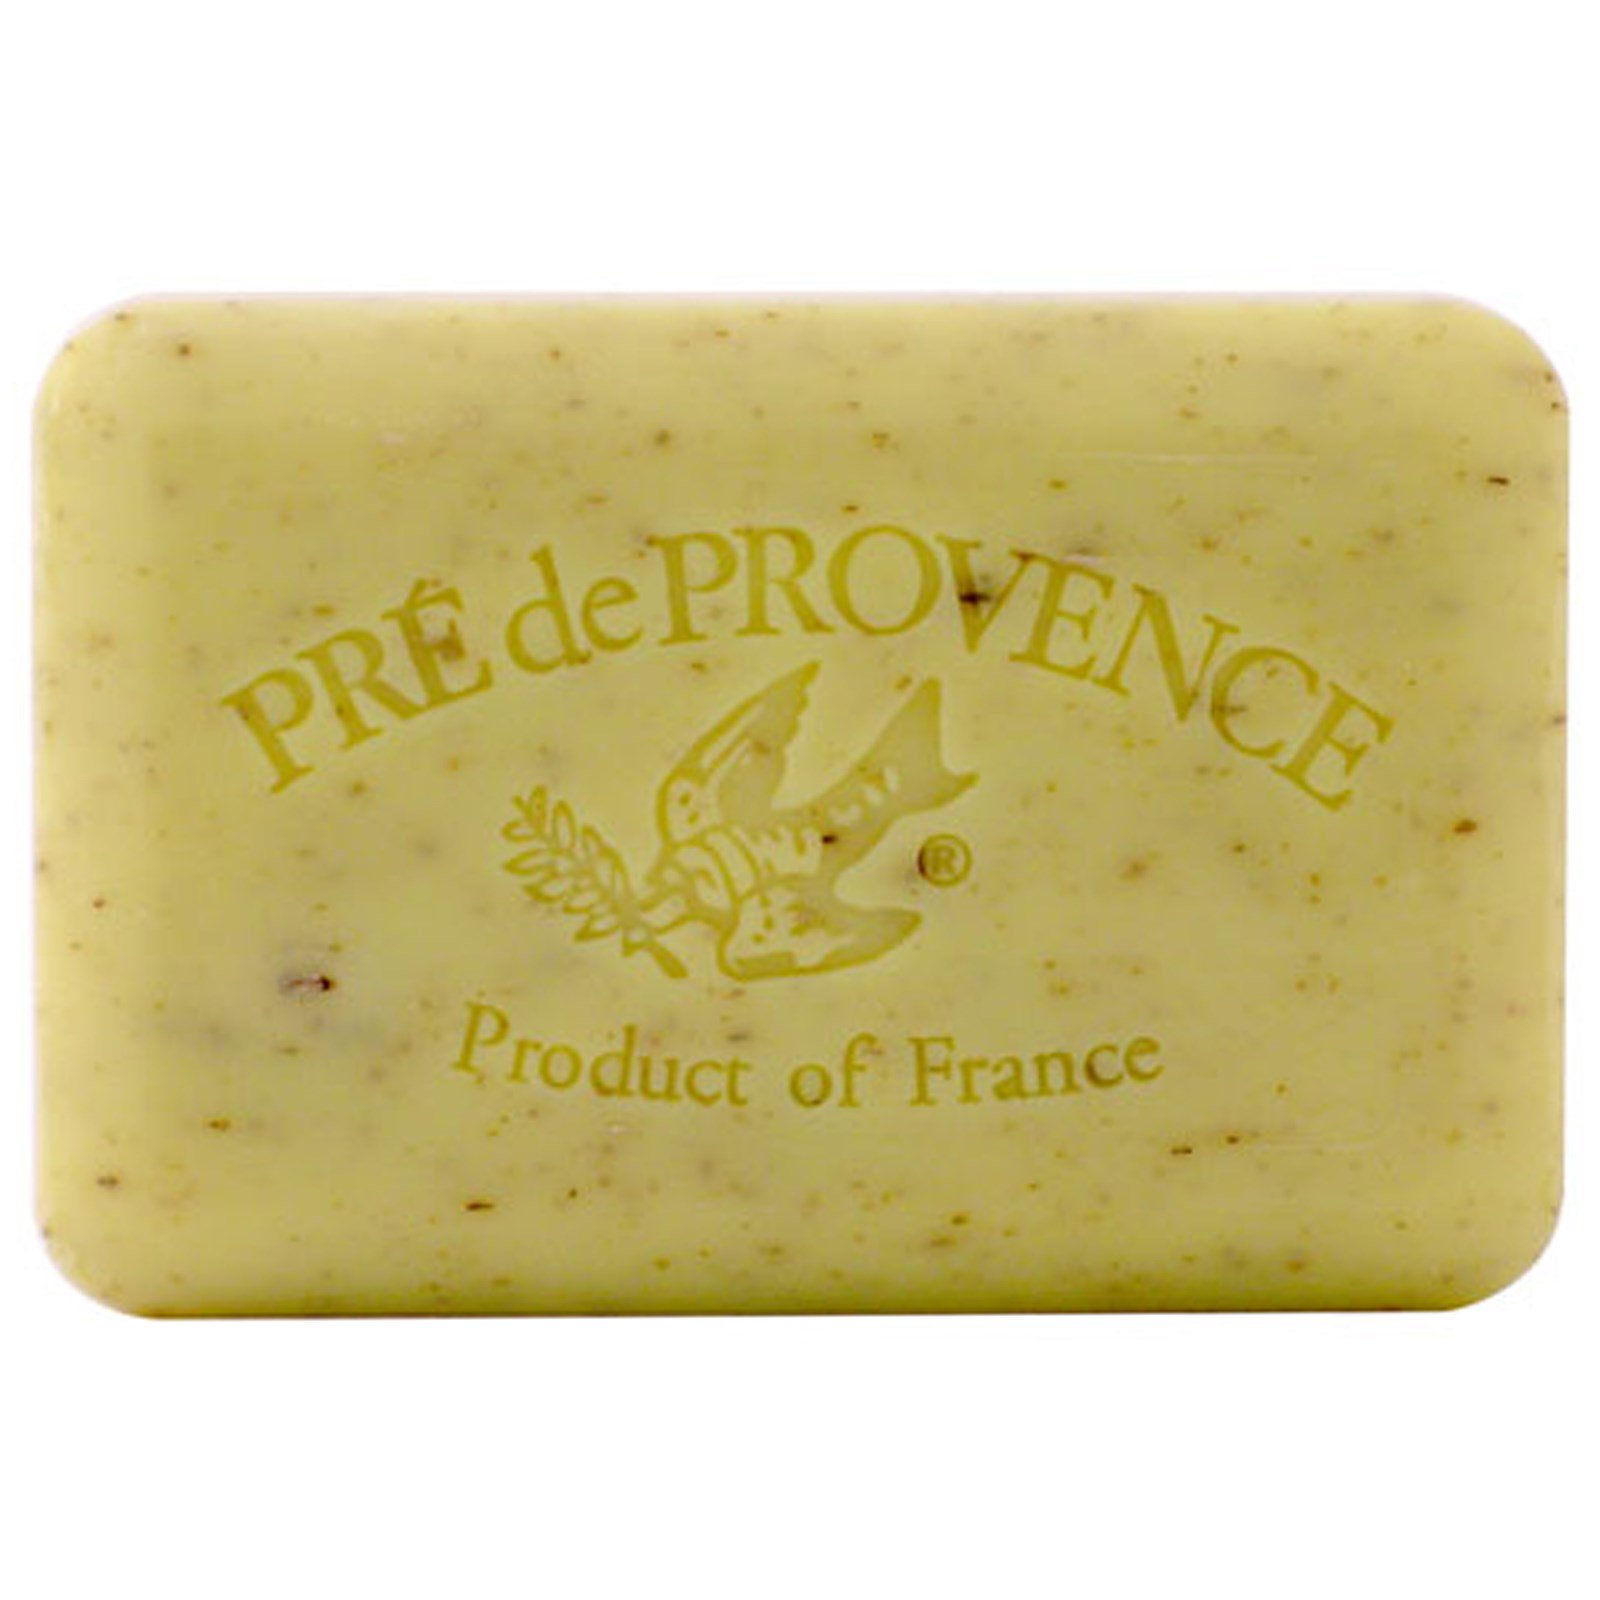 European Soaps, LLC, Мыло Pre de Provence с лимонником, 8.8 унций (250 г)